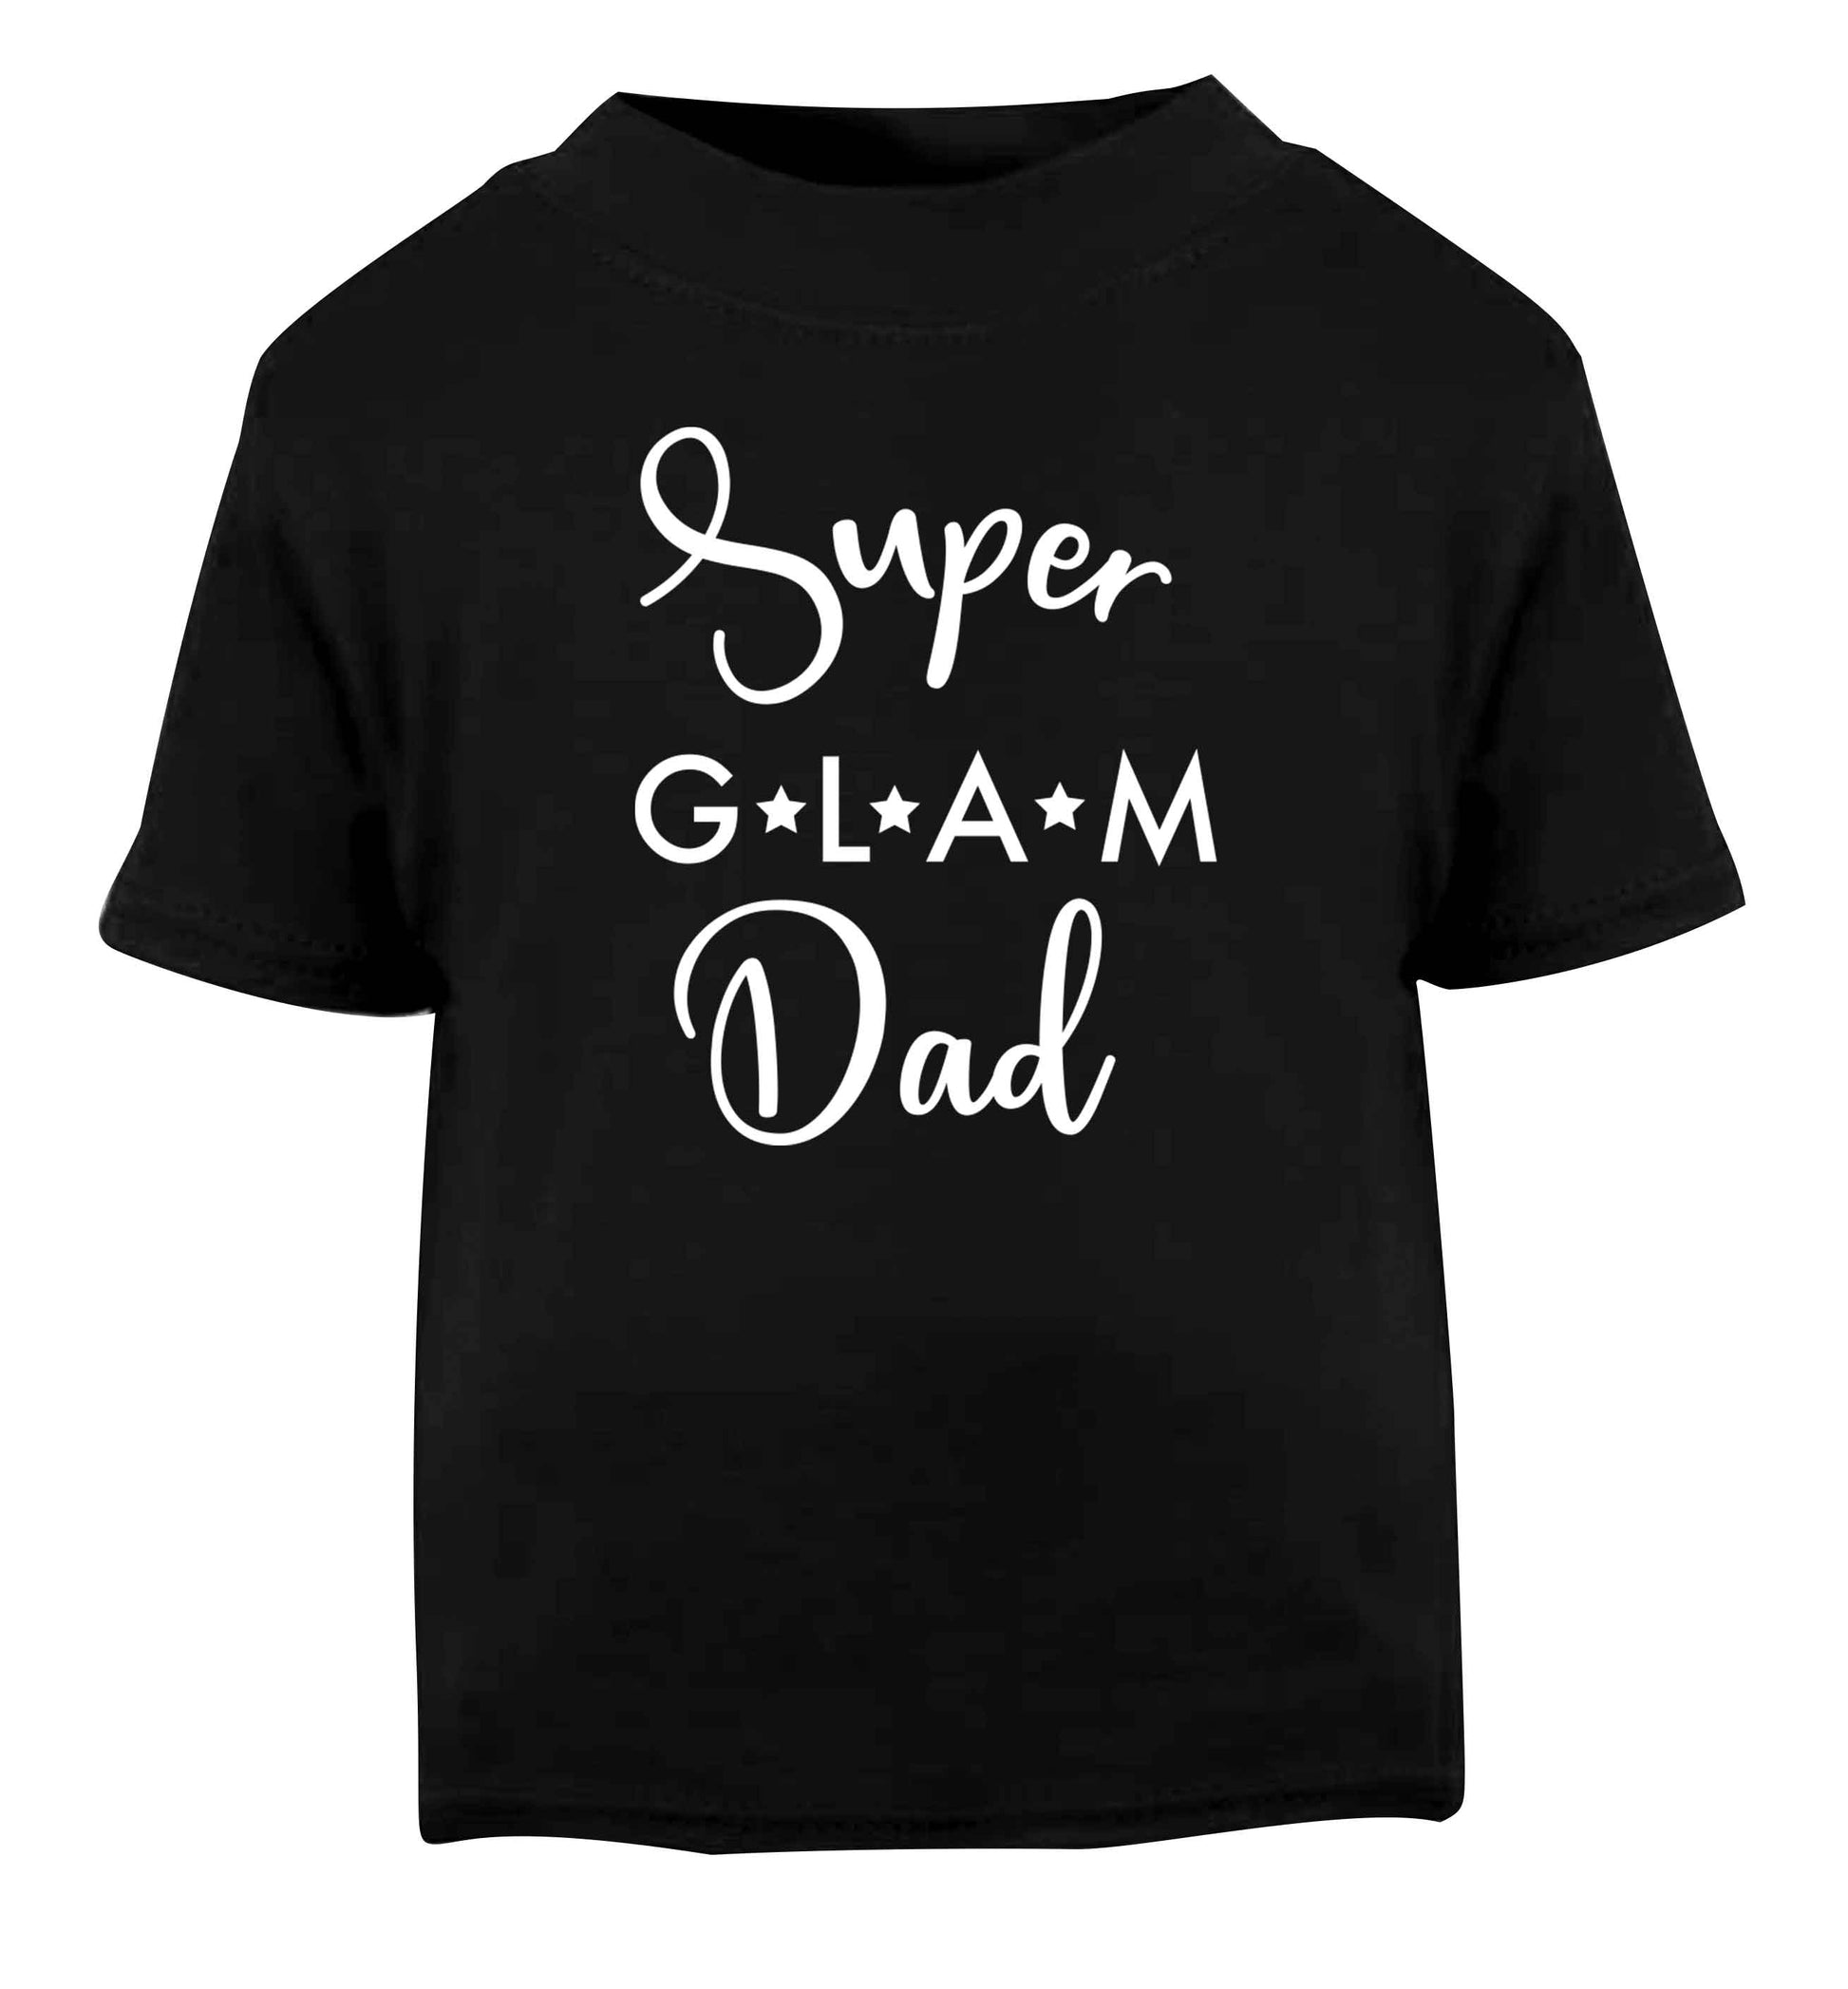 Super glam Dad Black Baby Toddler Tshirt 2 years